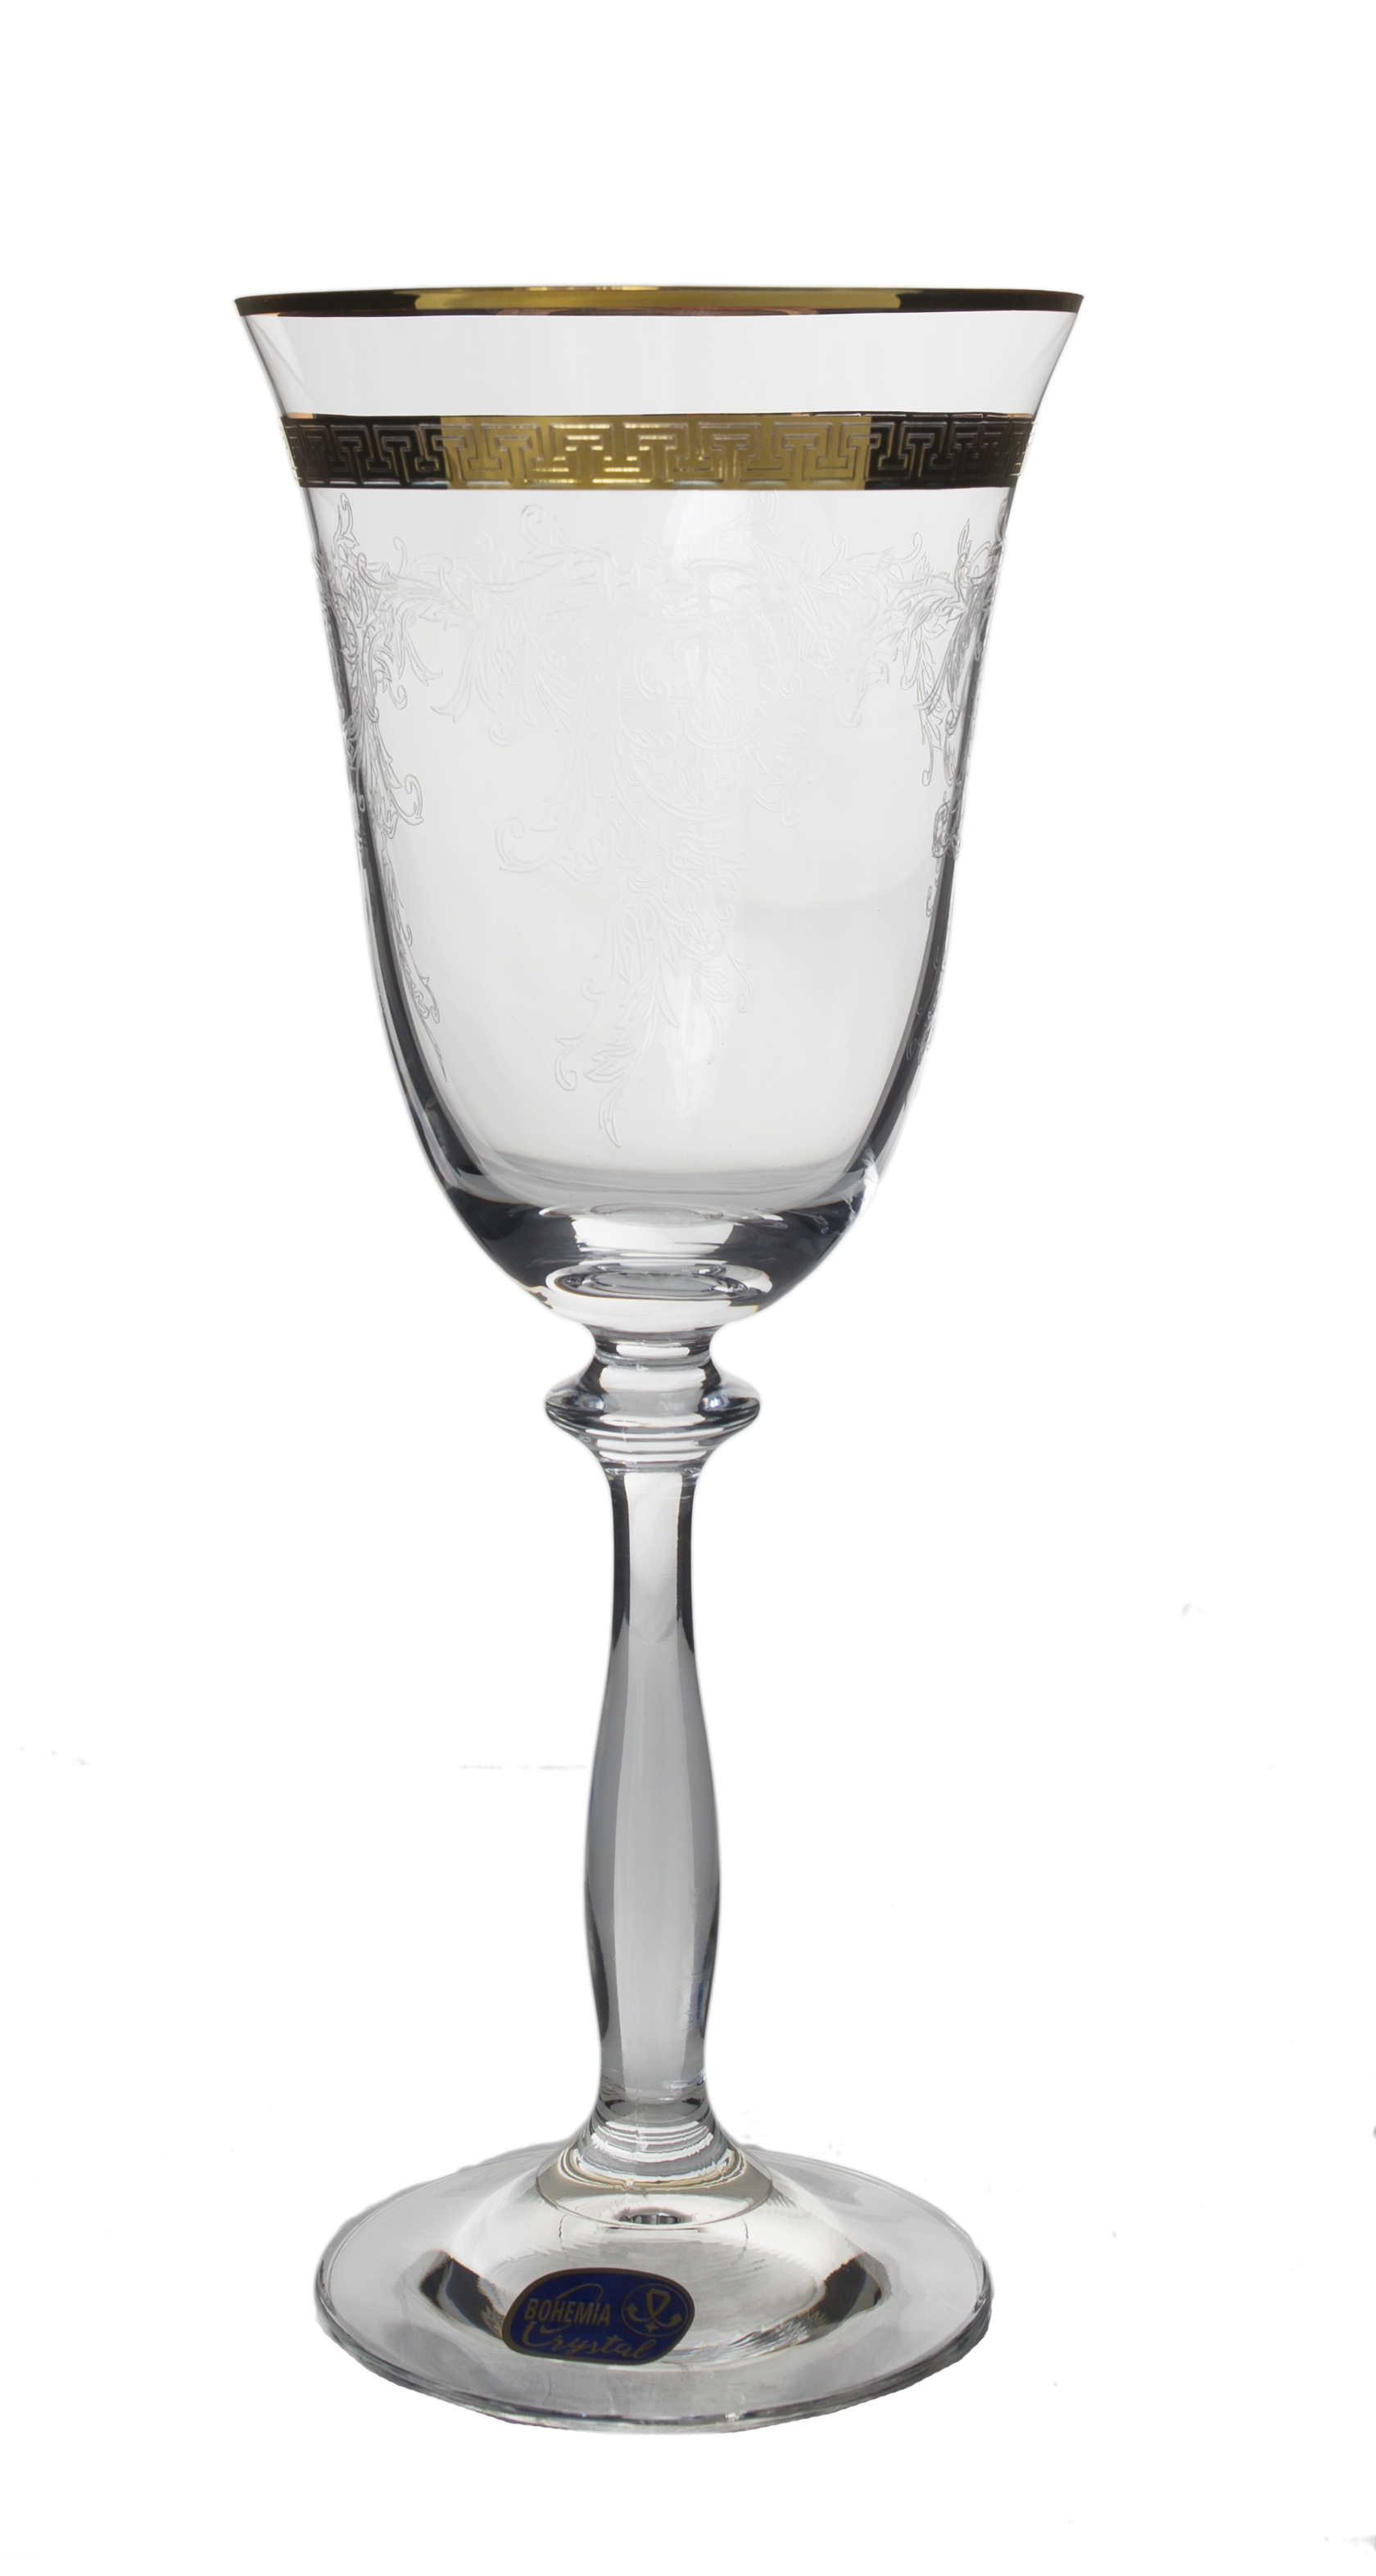 GIULIA decor aur - Set 6 pahare cristalin vin 250 ml